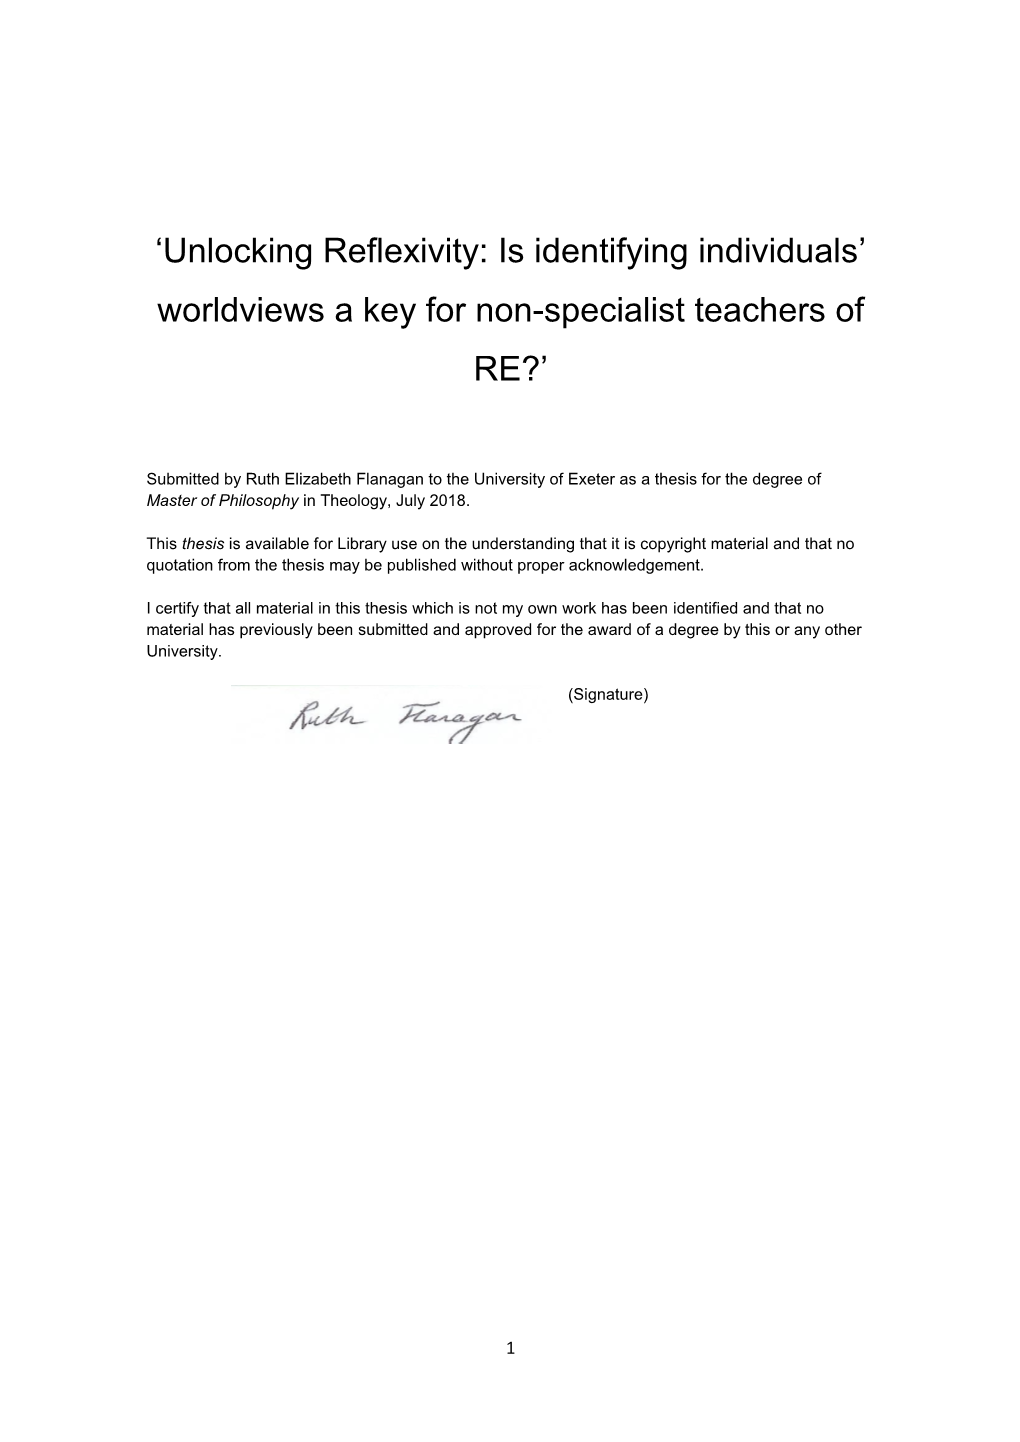 'Unlocking Reflexivity: Is Identifying